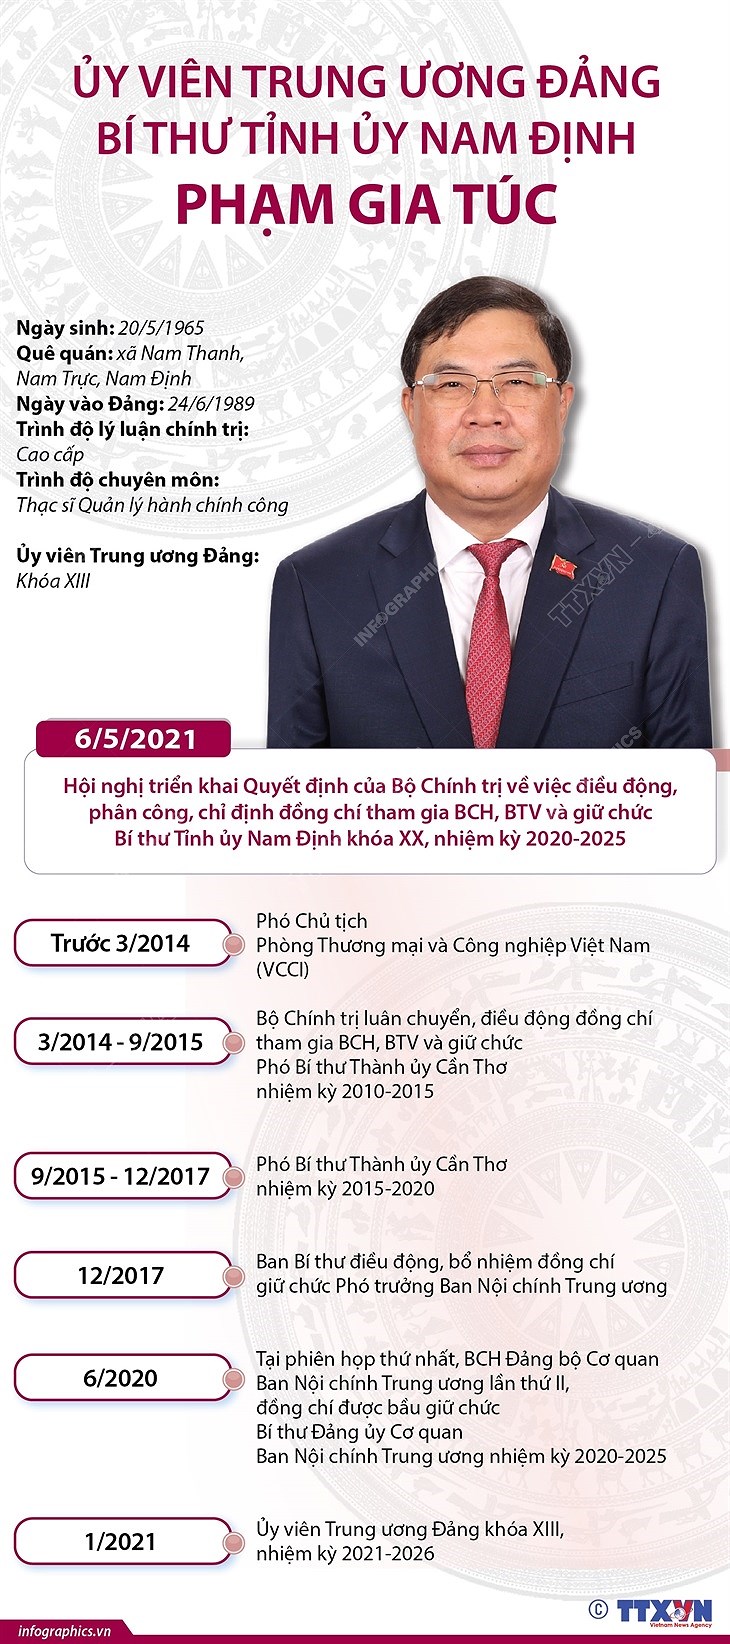 [Infographics] Uy vien TW Dang, Bi thu Tinh uy Nam Dinh Pham Gia Tuc hinh anh 1